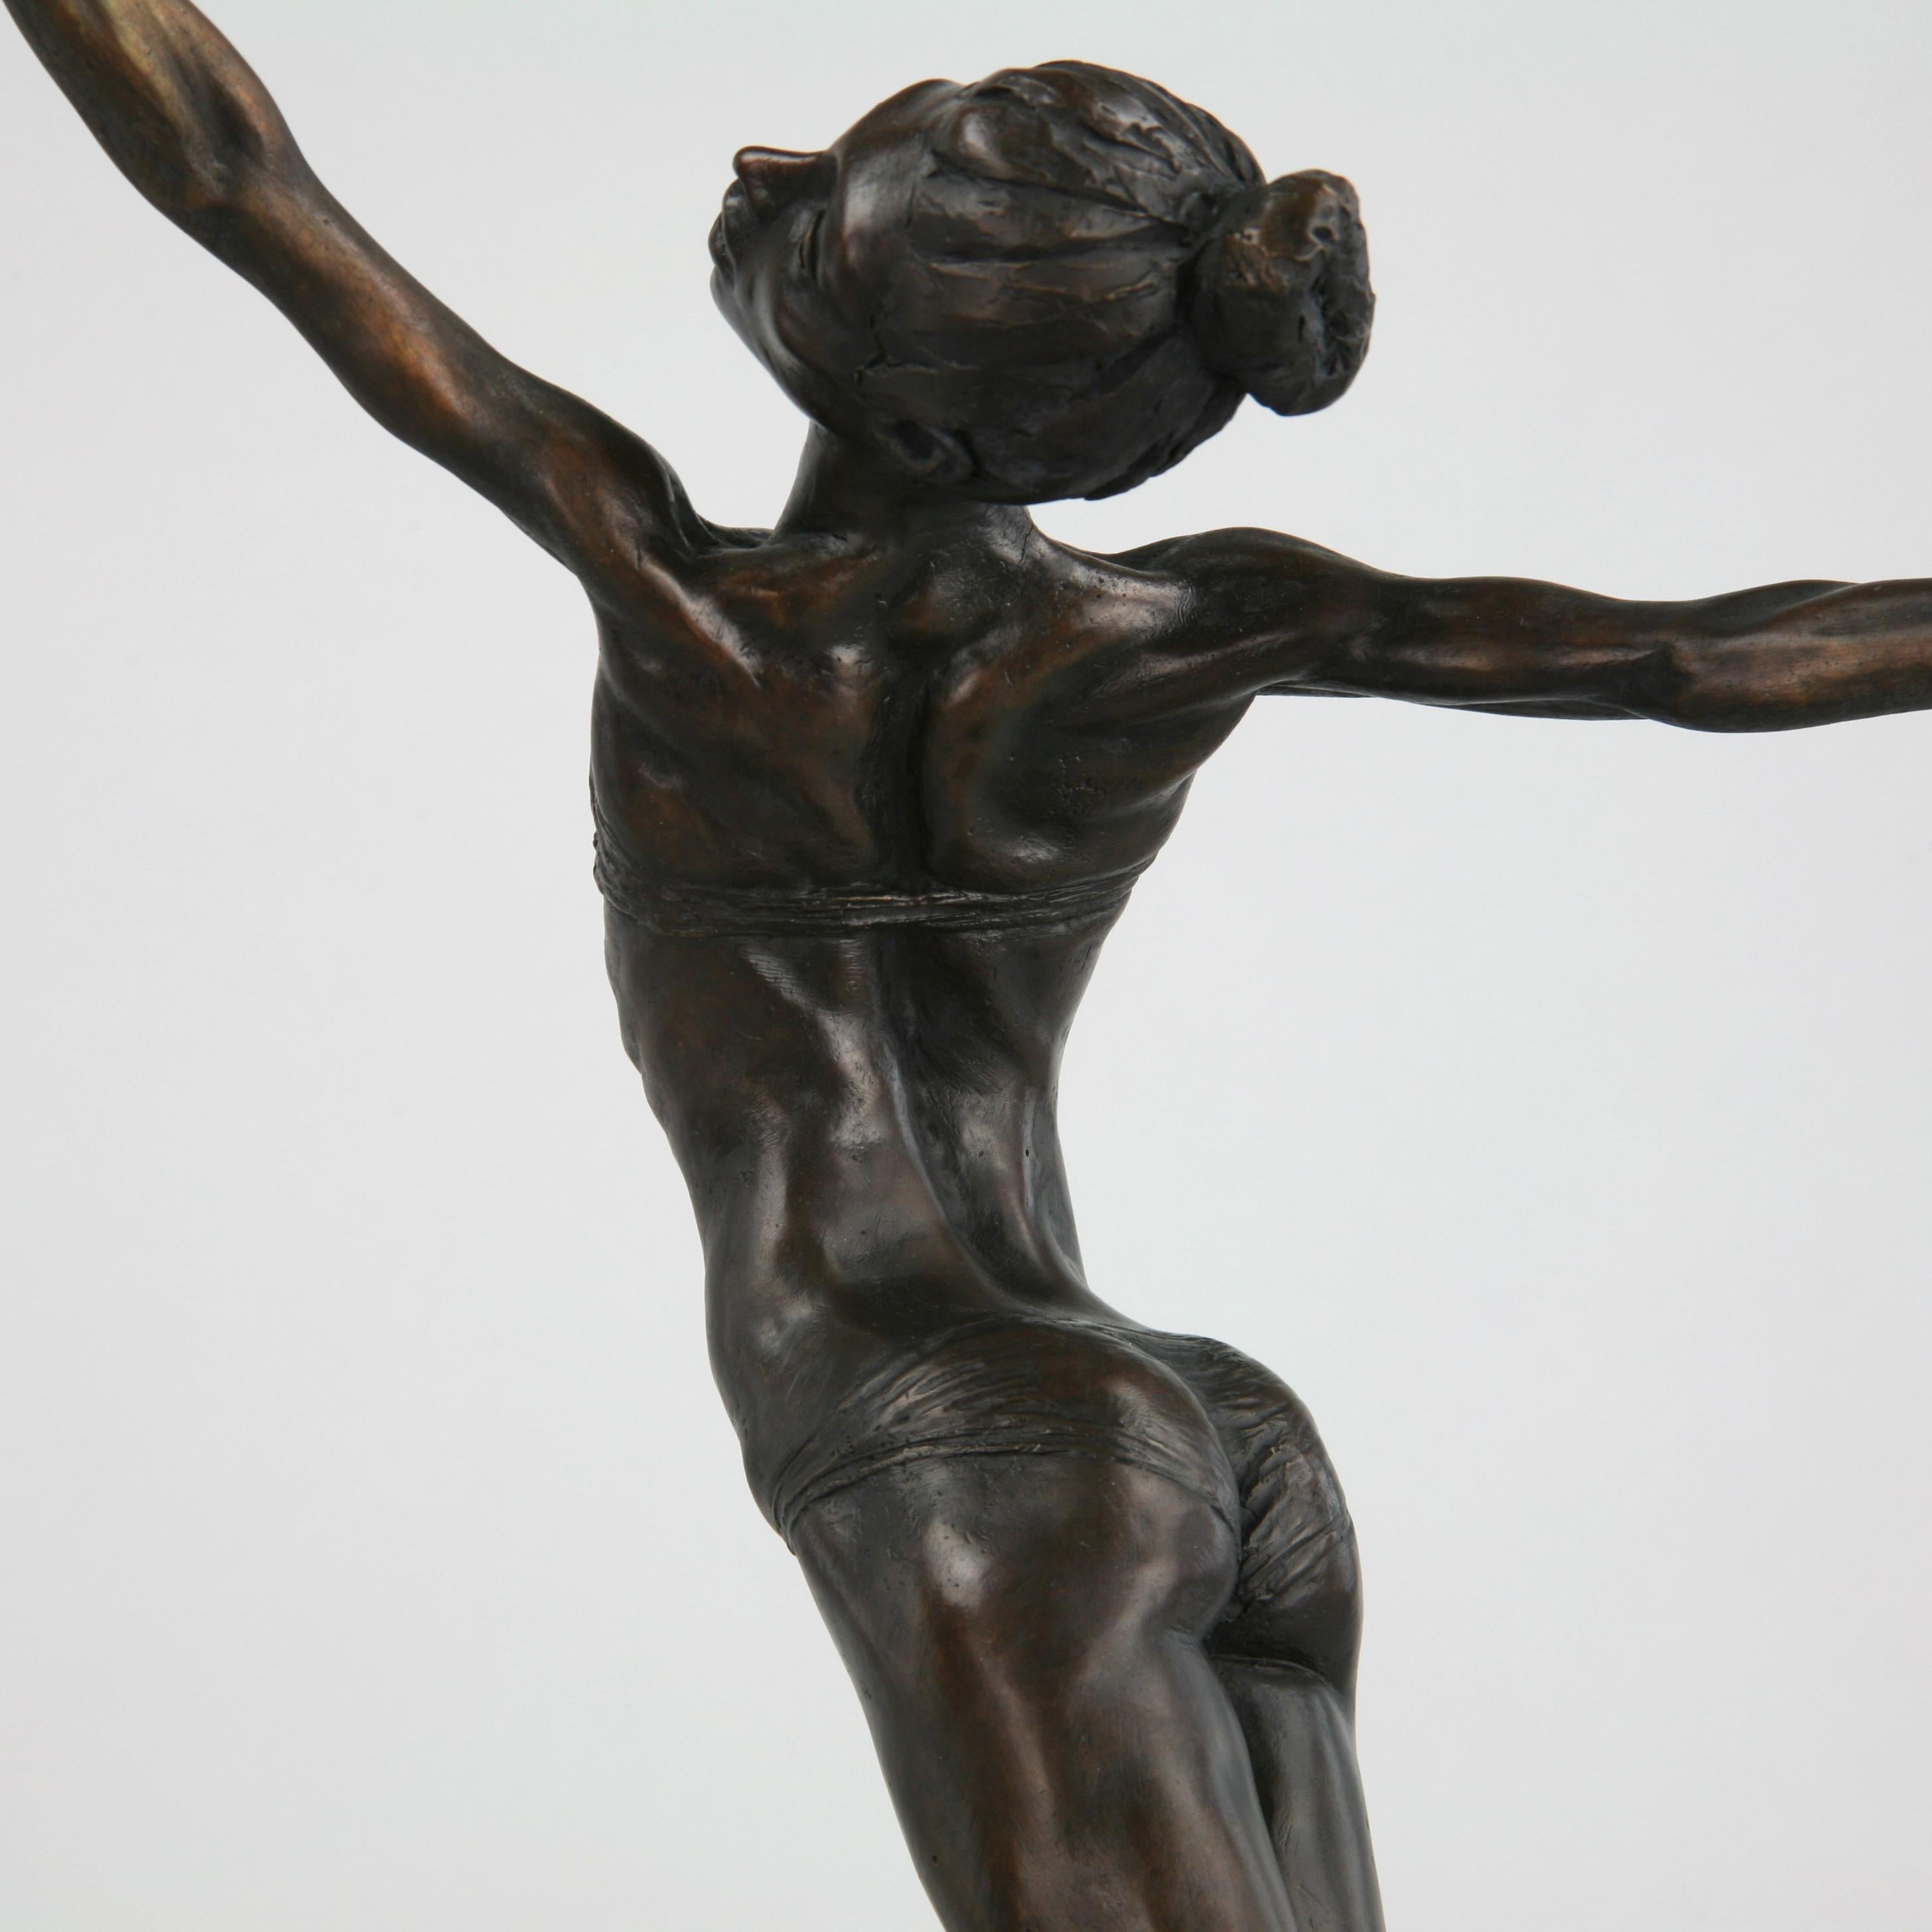 Pole Dancer-original nude figurative bronze sculpture-artwork-contemporary Art - Realist Sculpture by Andrzej Szymczyk